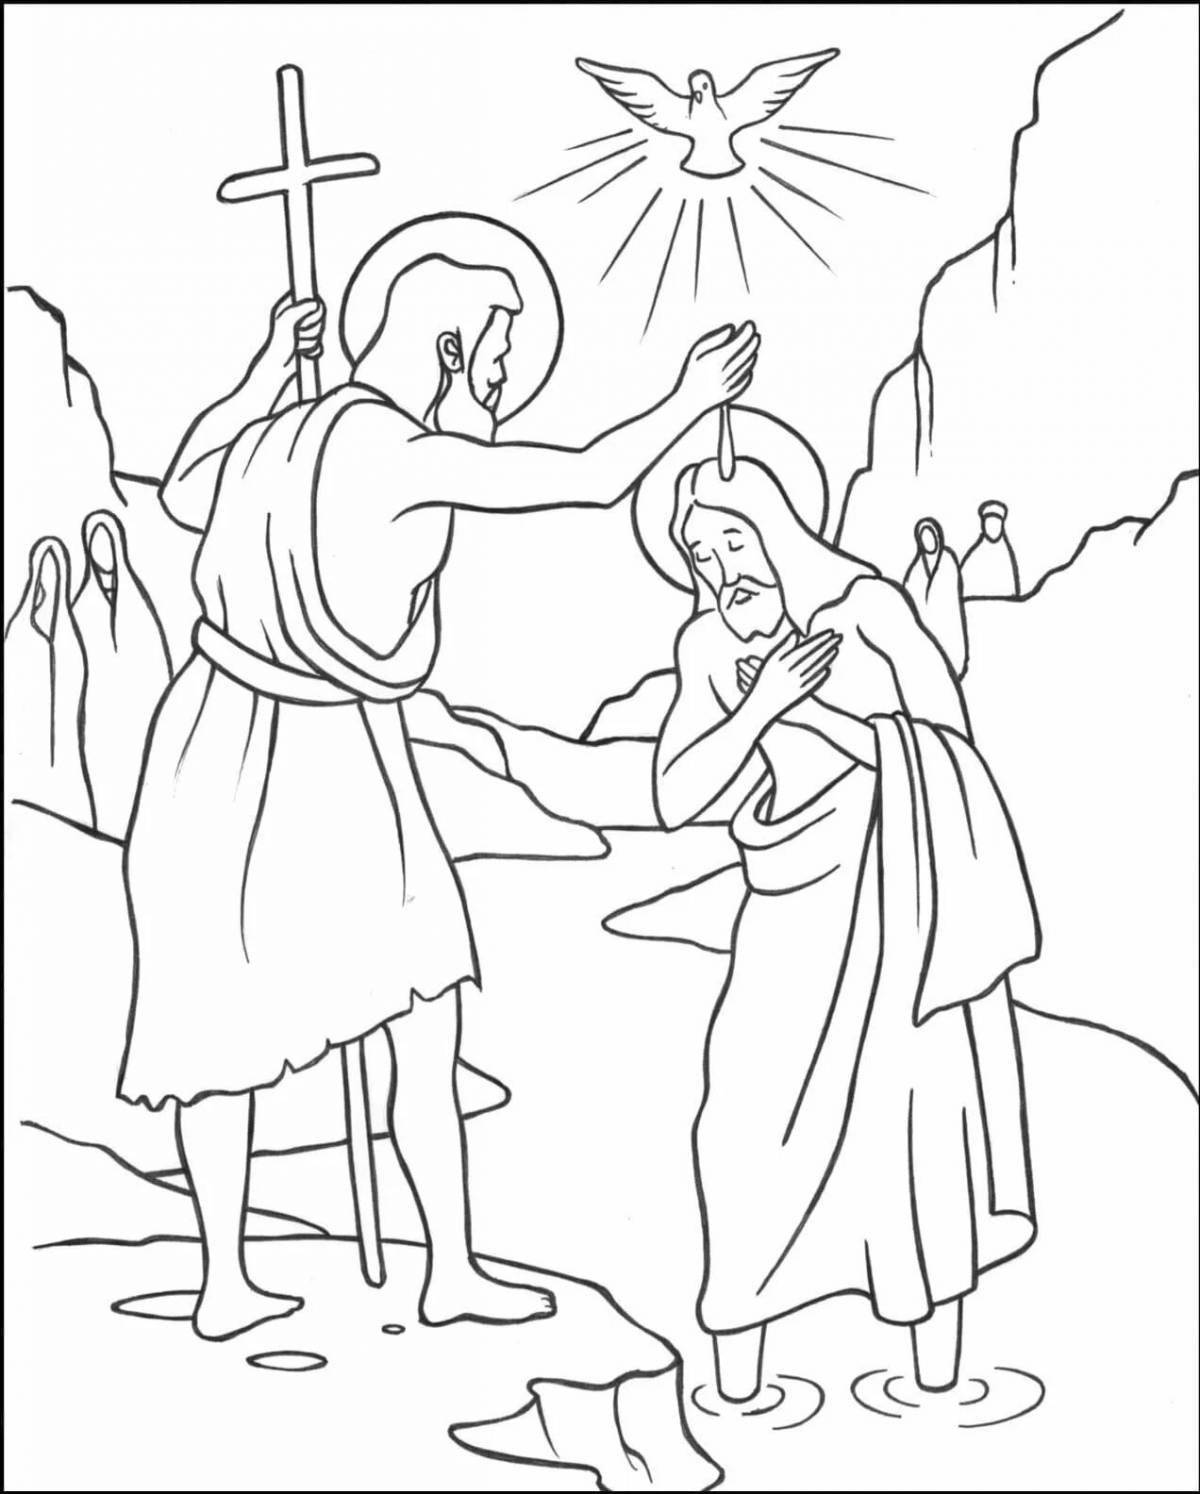 Divine baptism coloring page